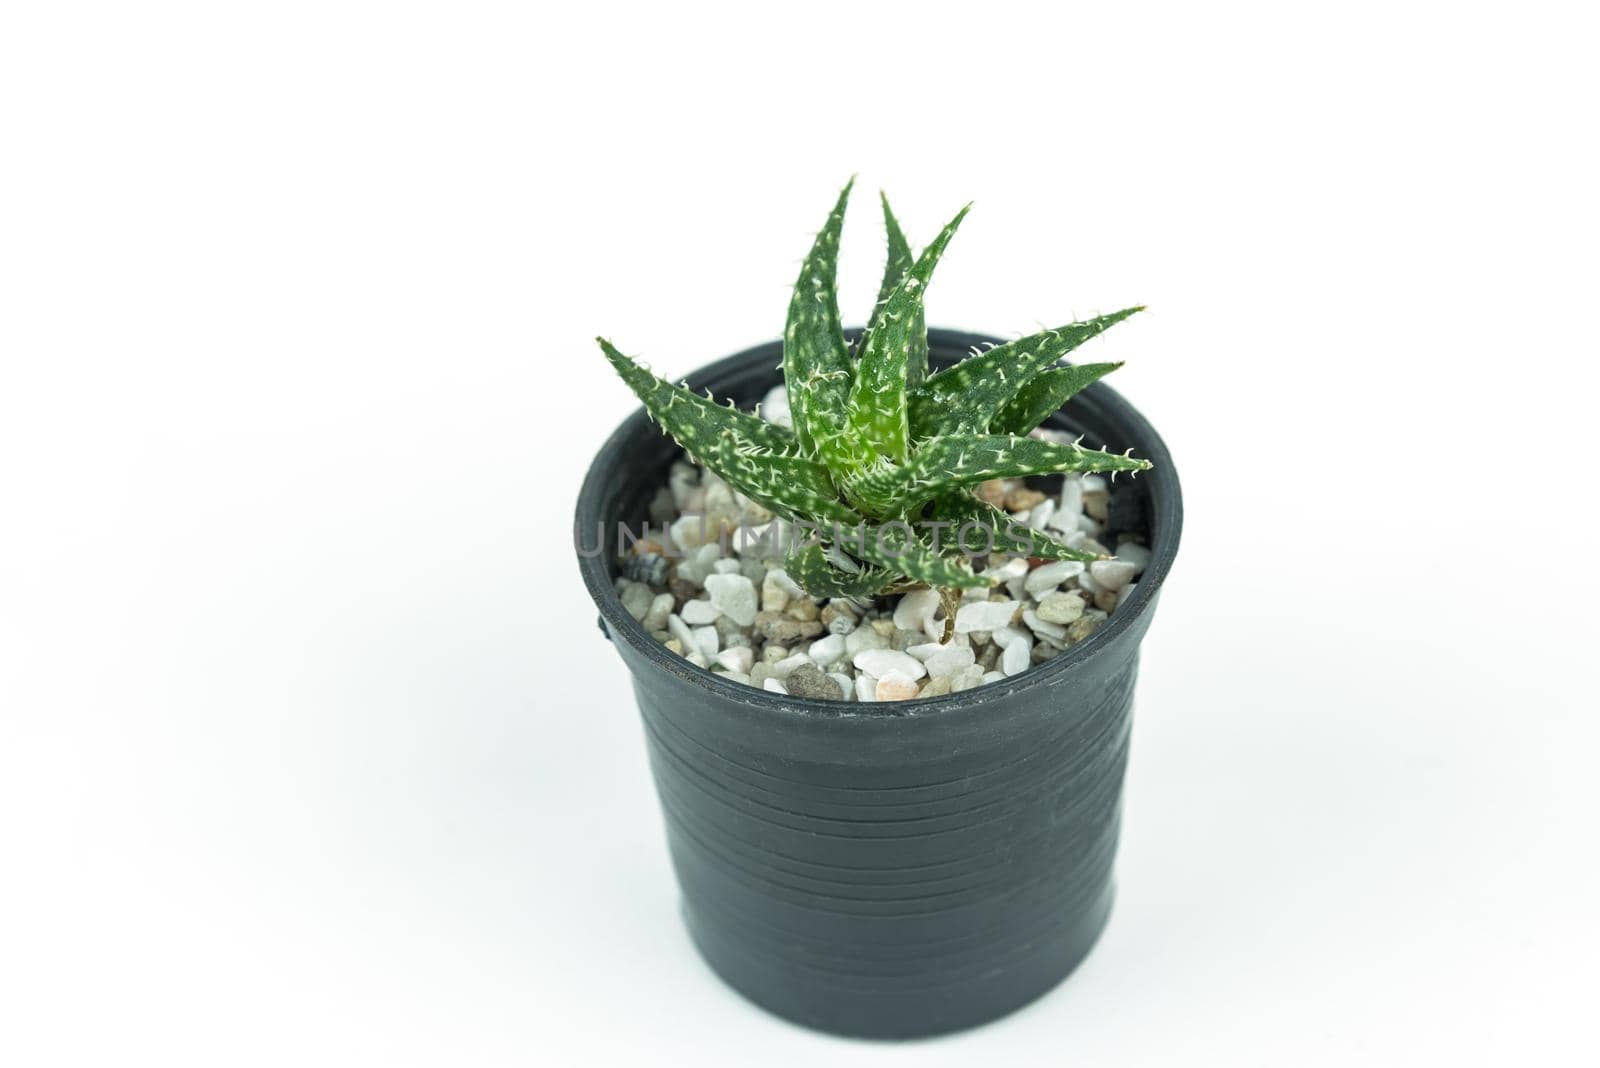 cactus isolated on white background by Wmpix